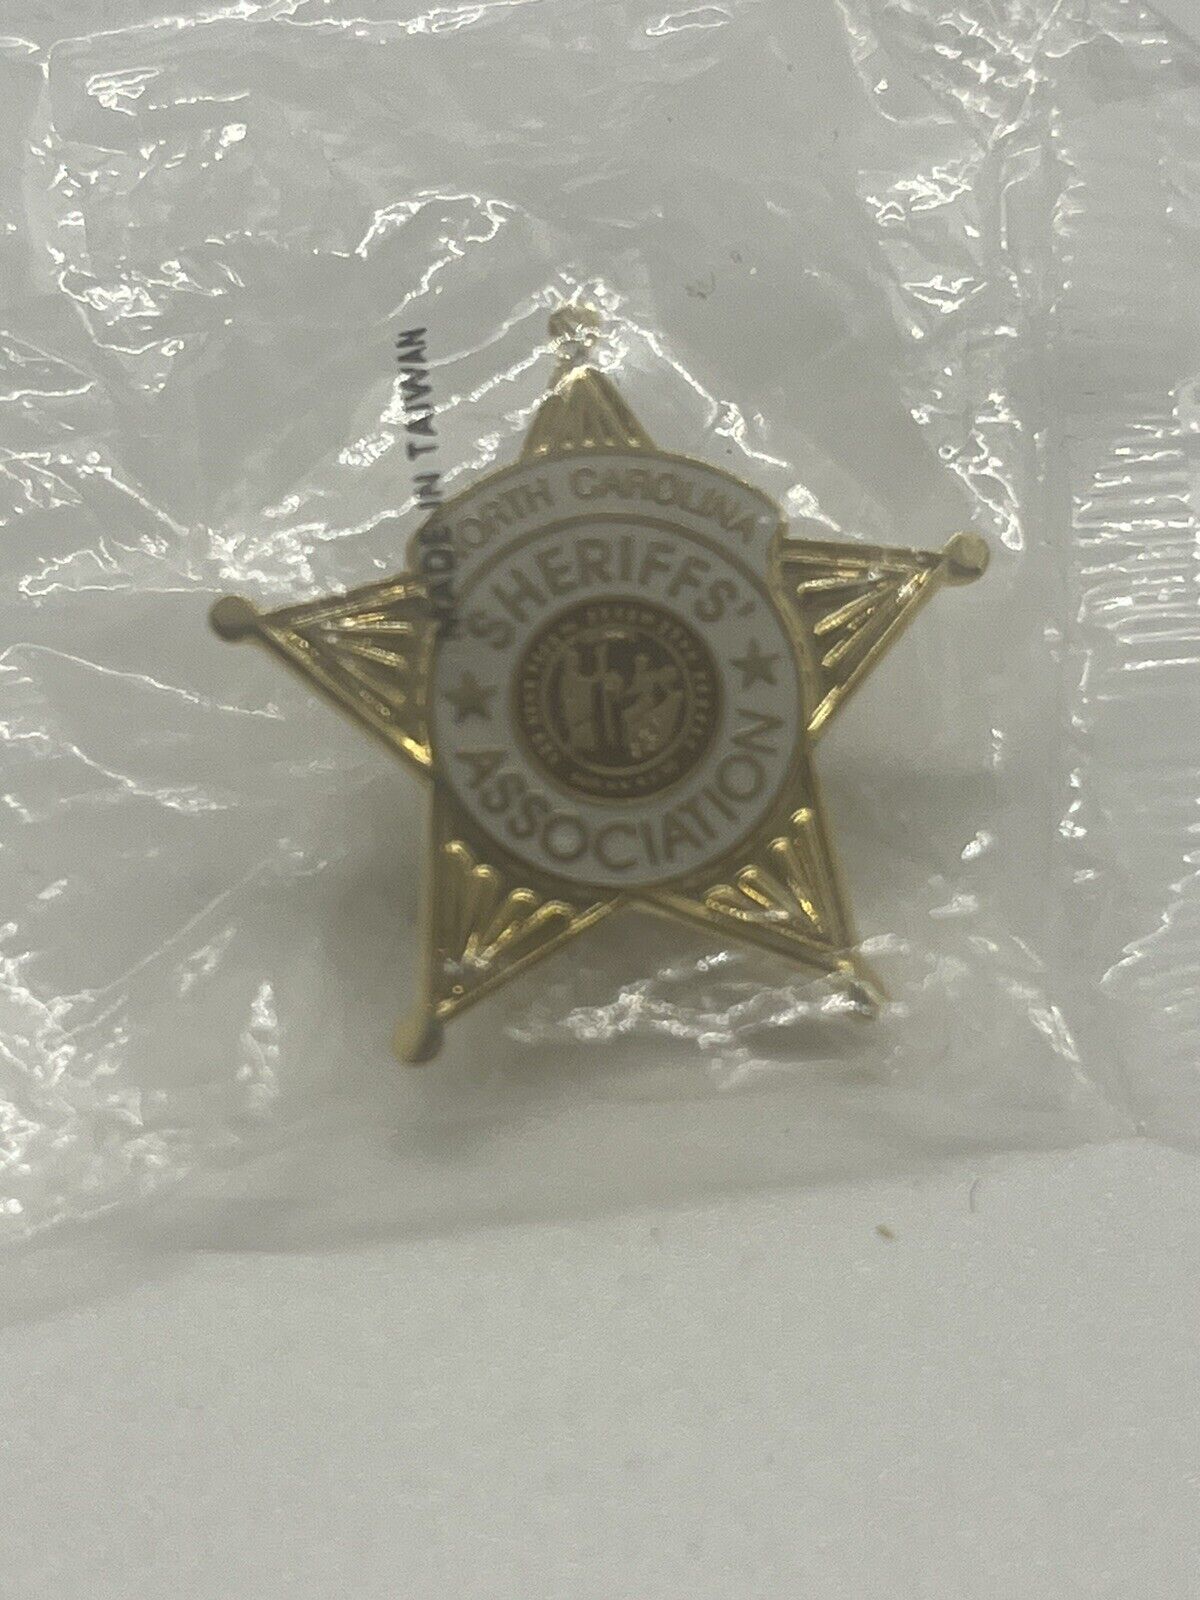 North Carolina Sheriffs Association Pin